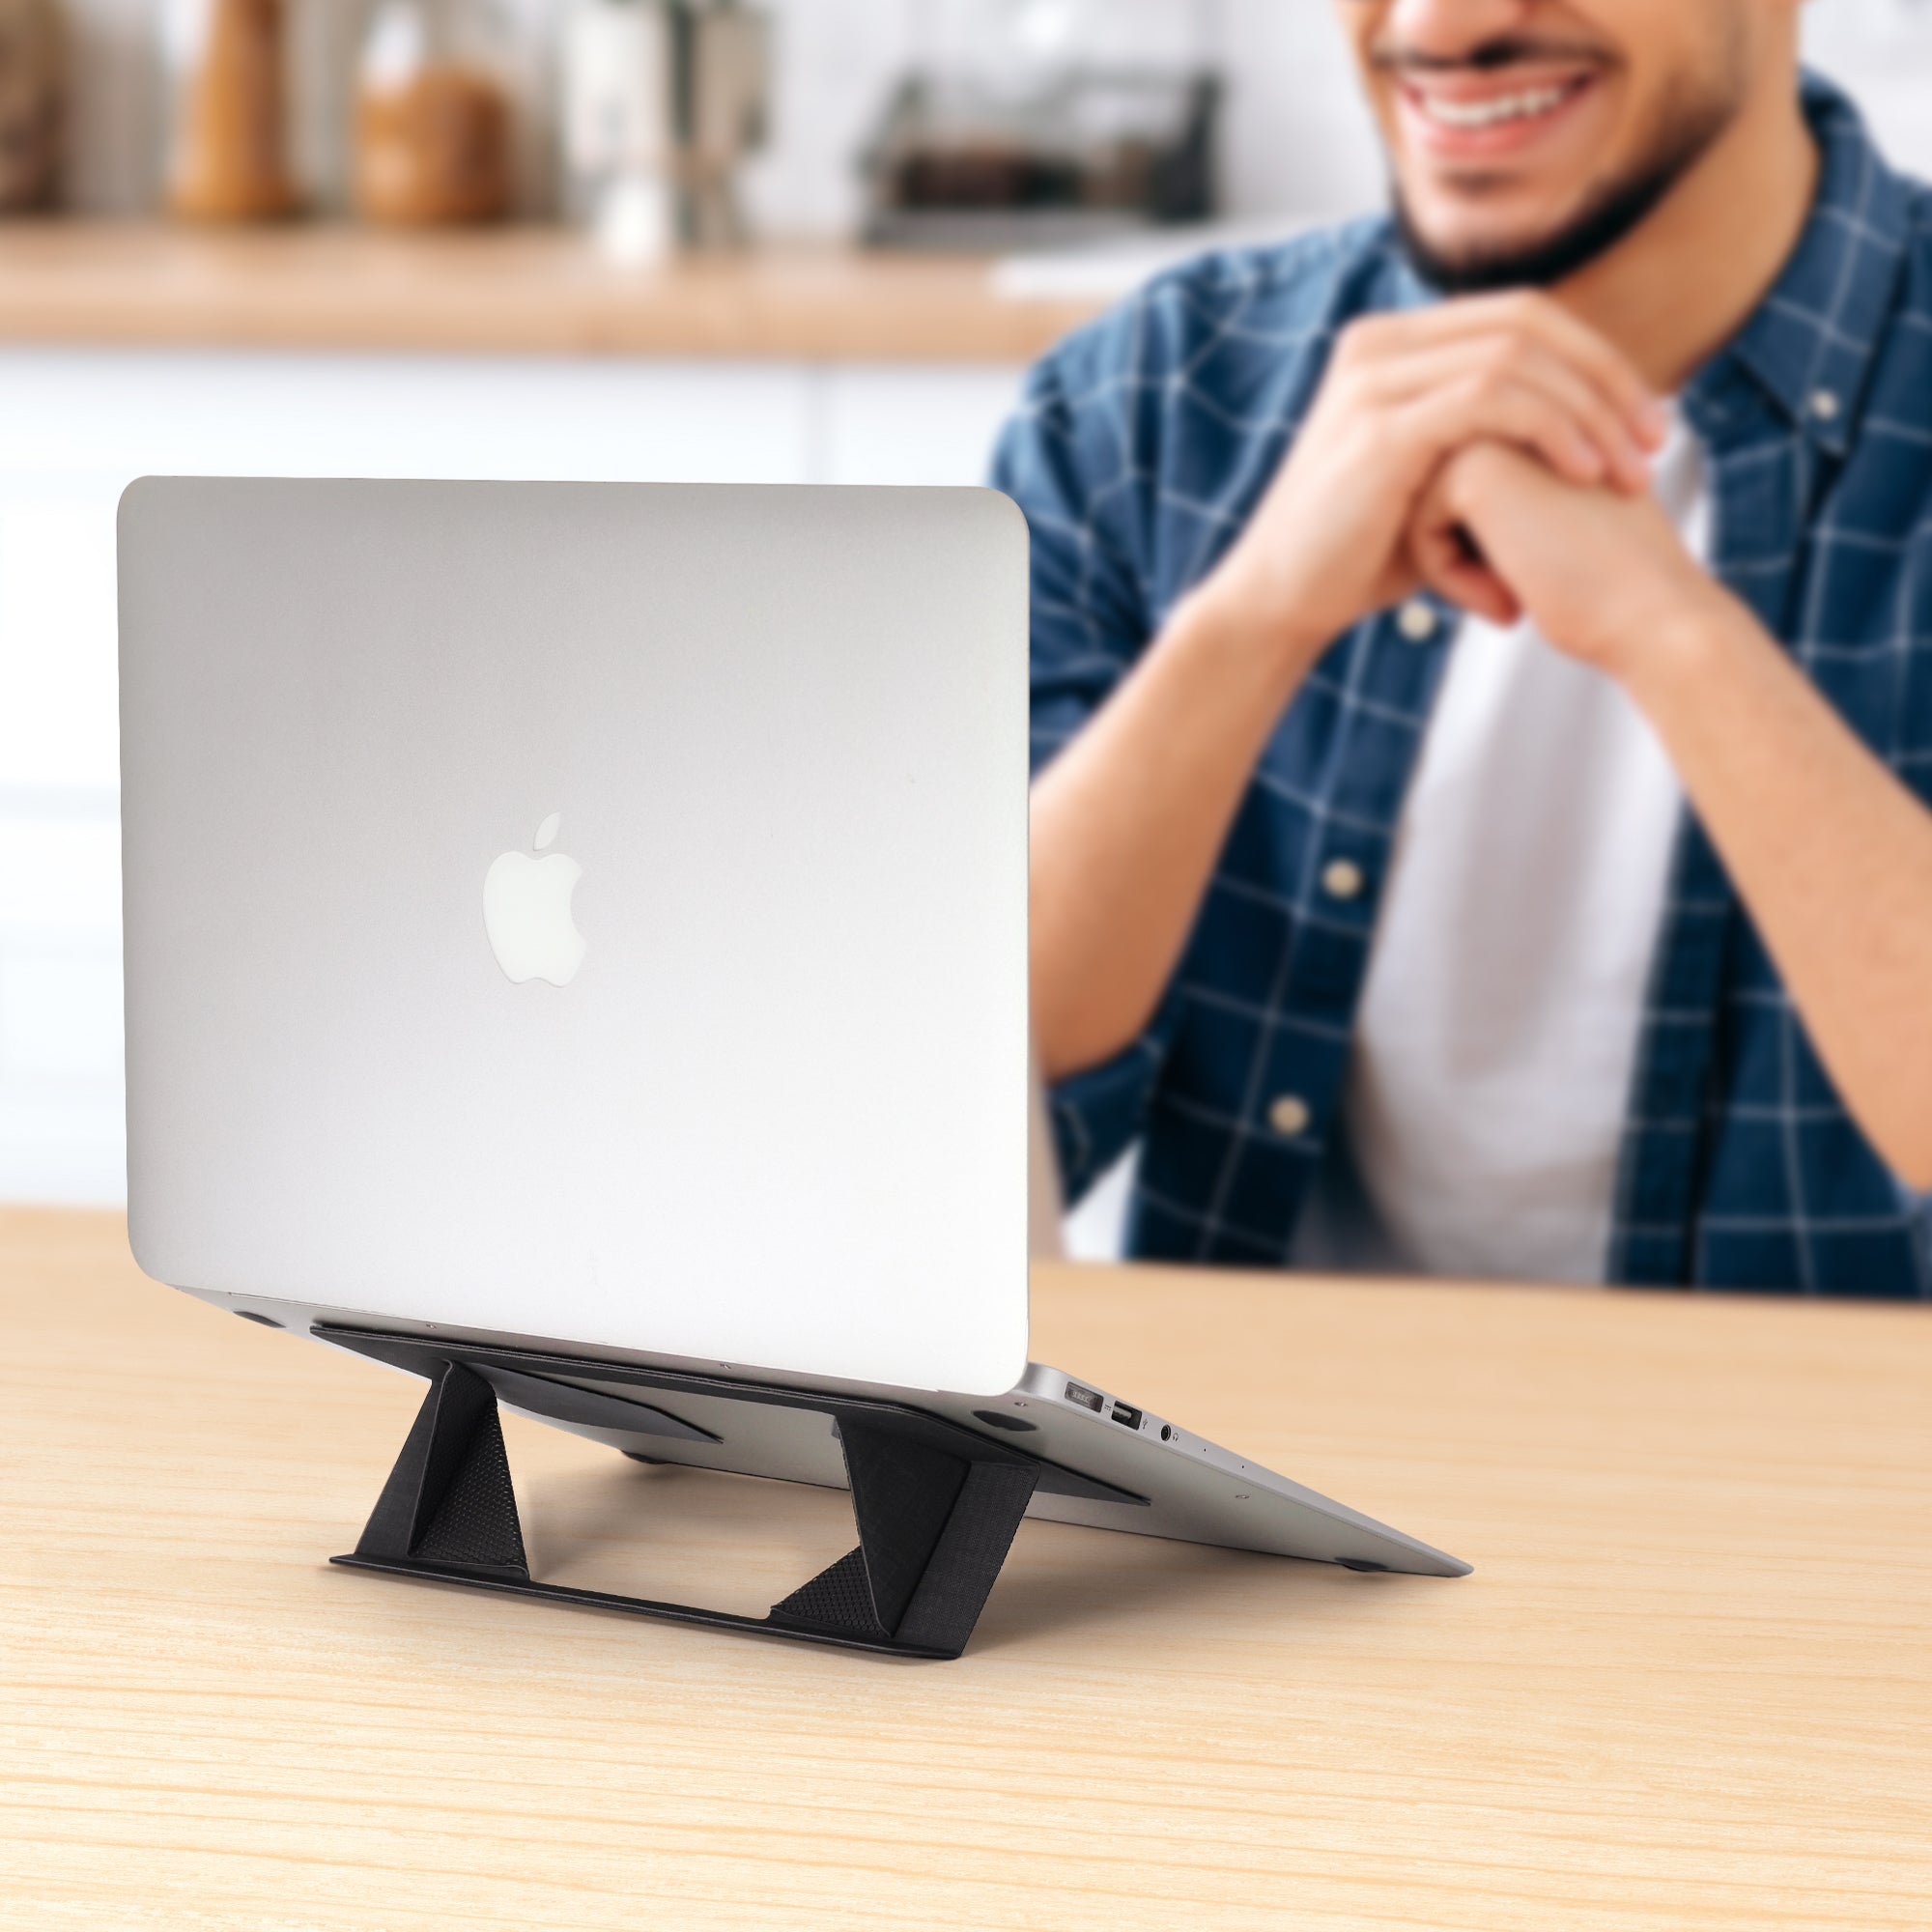 Elev8 Adhesive Adjustable Laptop Stand Ergonomic 2 Angles with Anti Slip Grip Sleek Hourglass Design